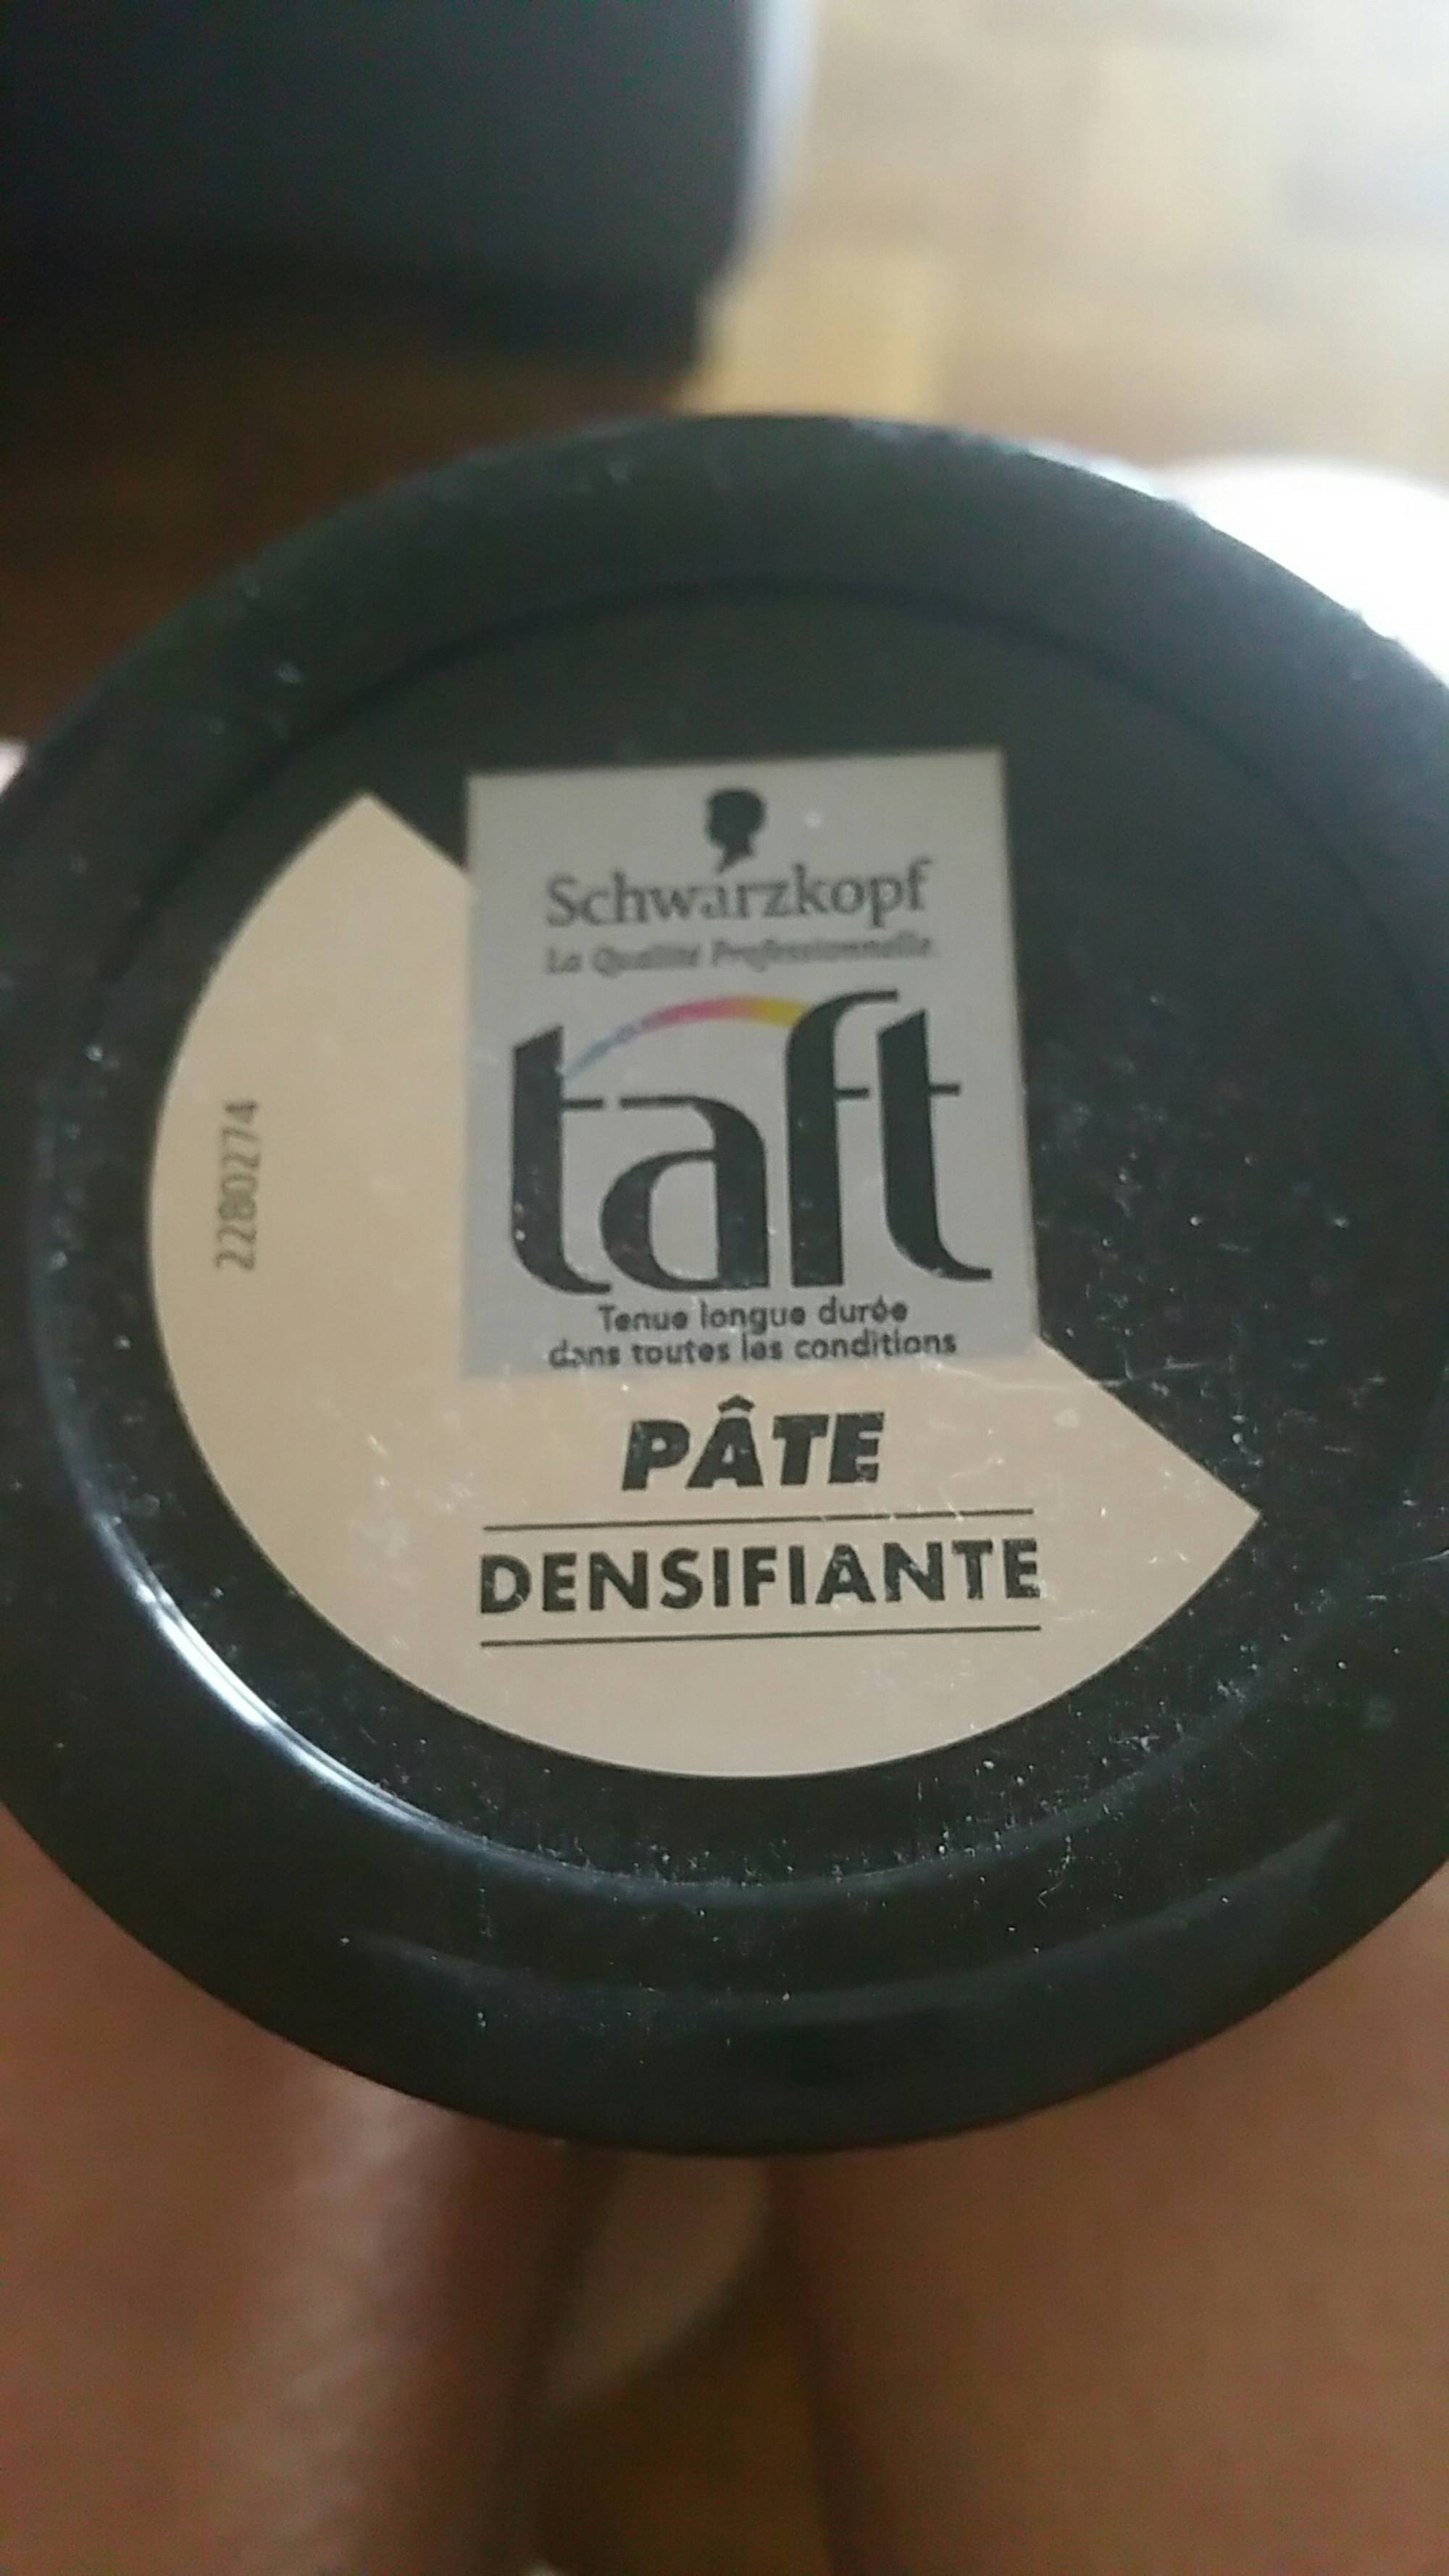 SCHWARZKOPF - Taft 5 - Pâte densifiante pour cheveux secs